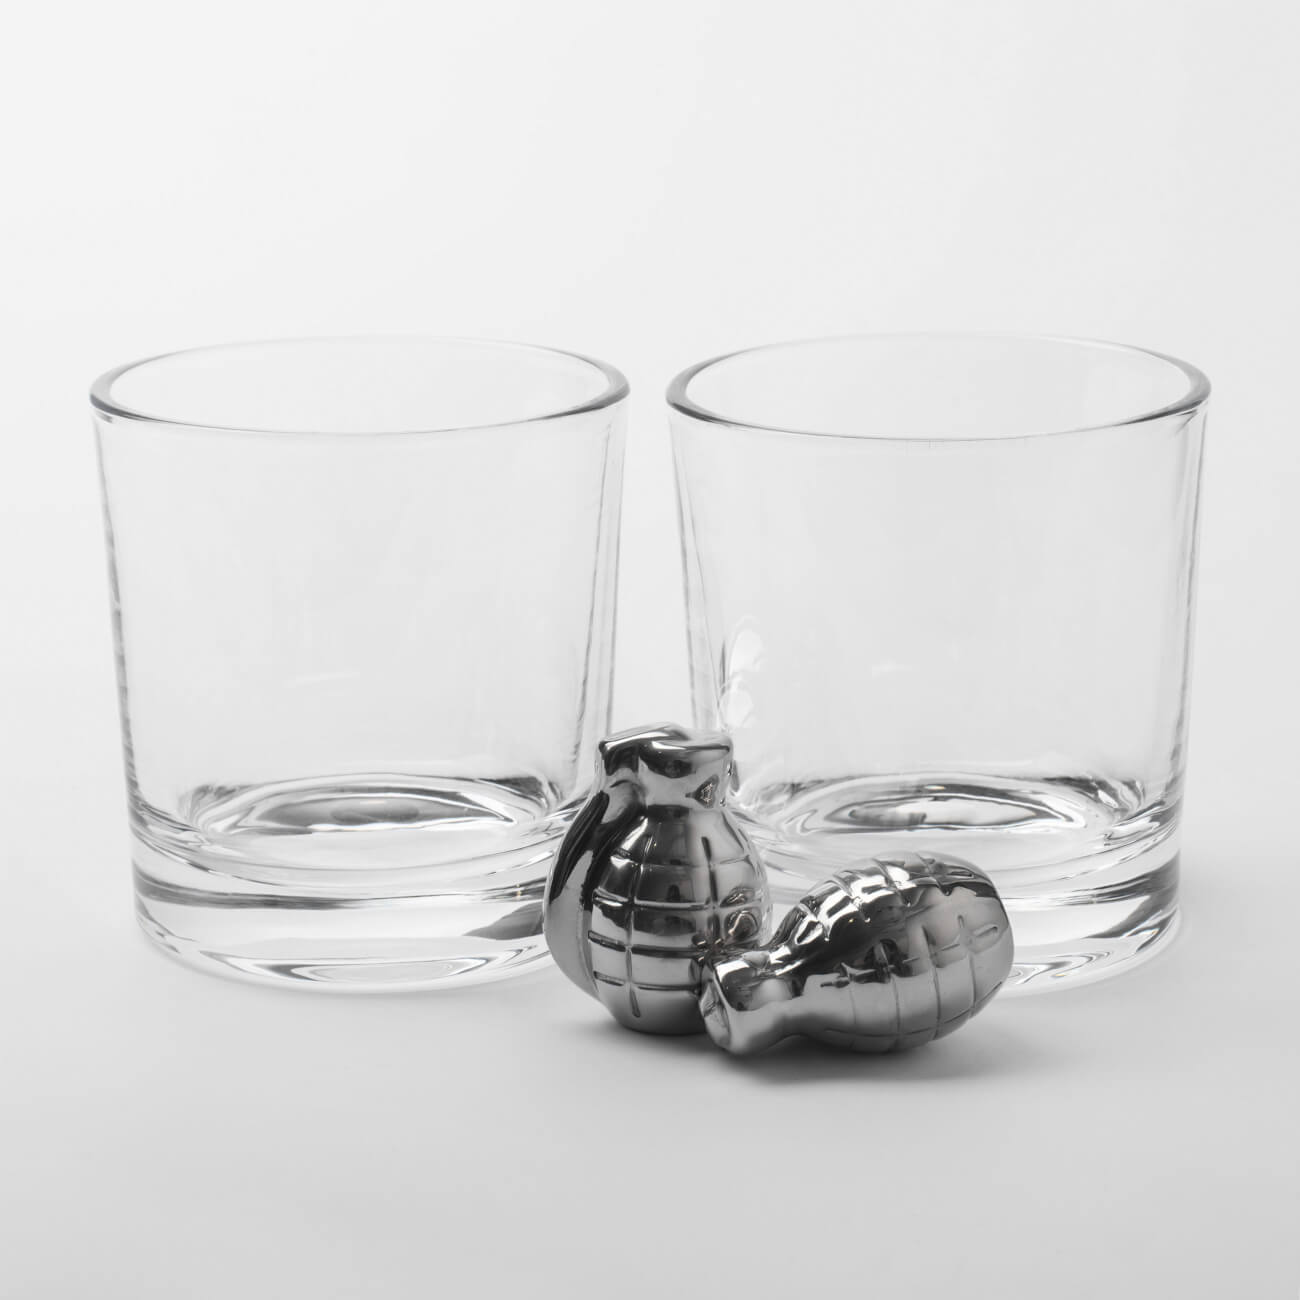 Набор для виски, 2 перс, 4 пр, стаканы/кубики, стекло/сталь, Граната, Bullet iq кубики